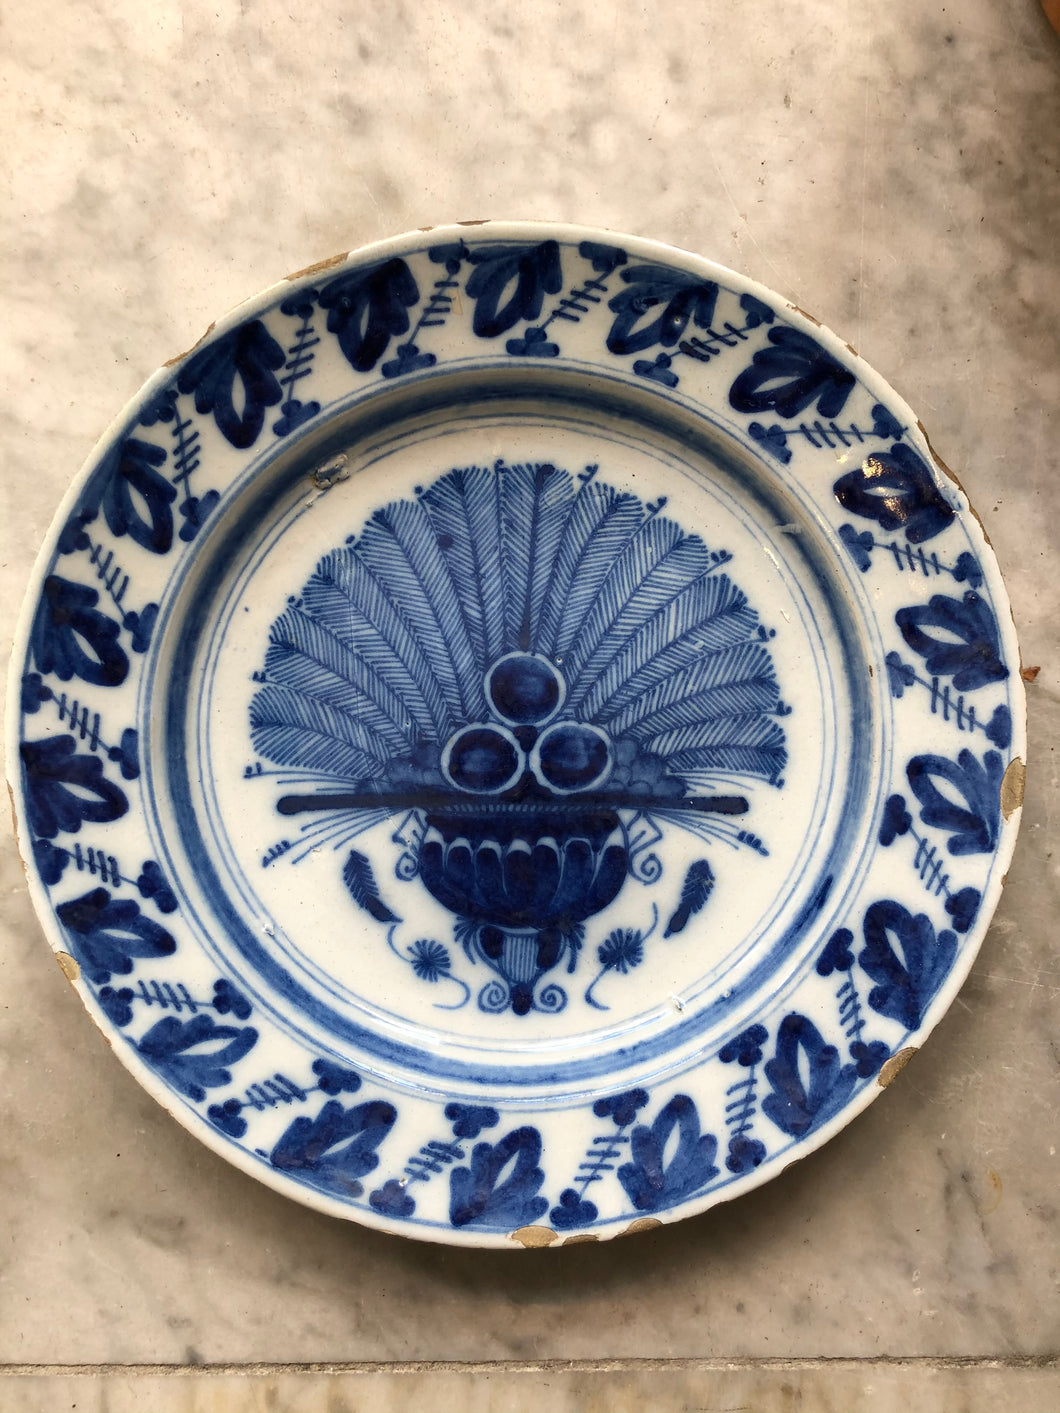 Delfts blue 18 th century delft handpainted plate